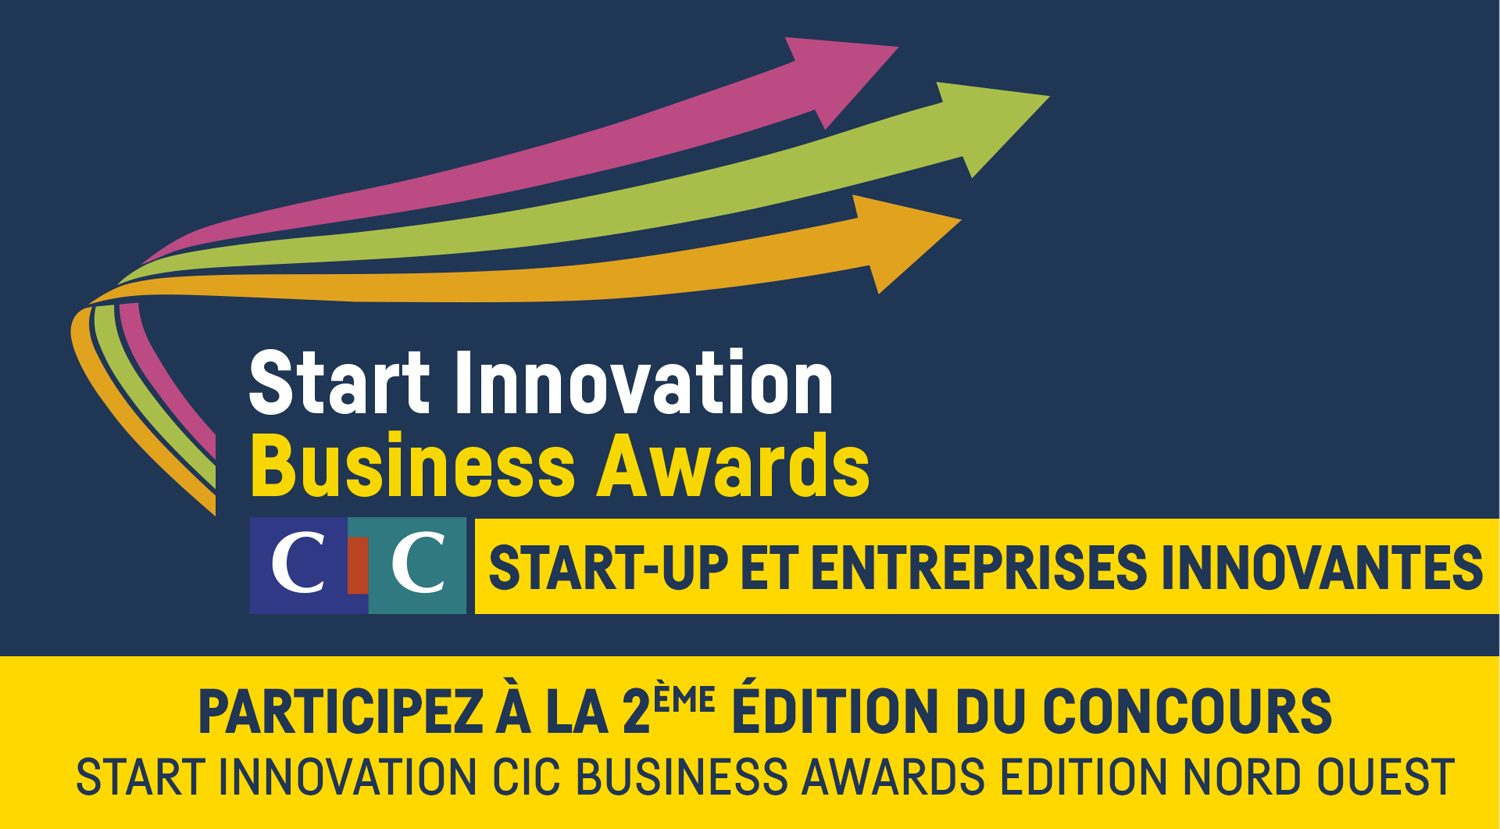 Start Innovation Business Awards 2021